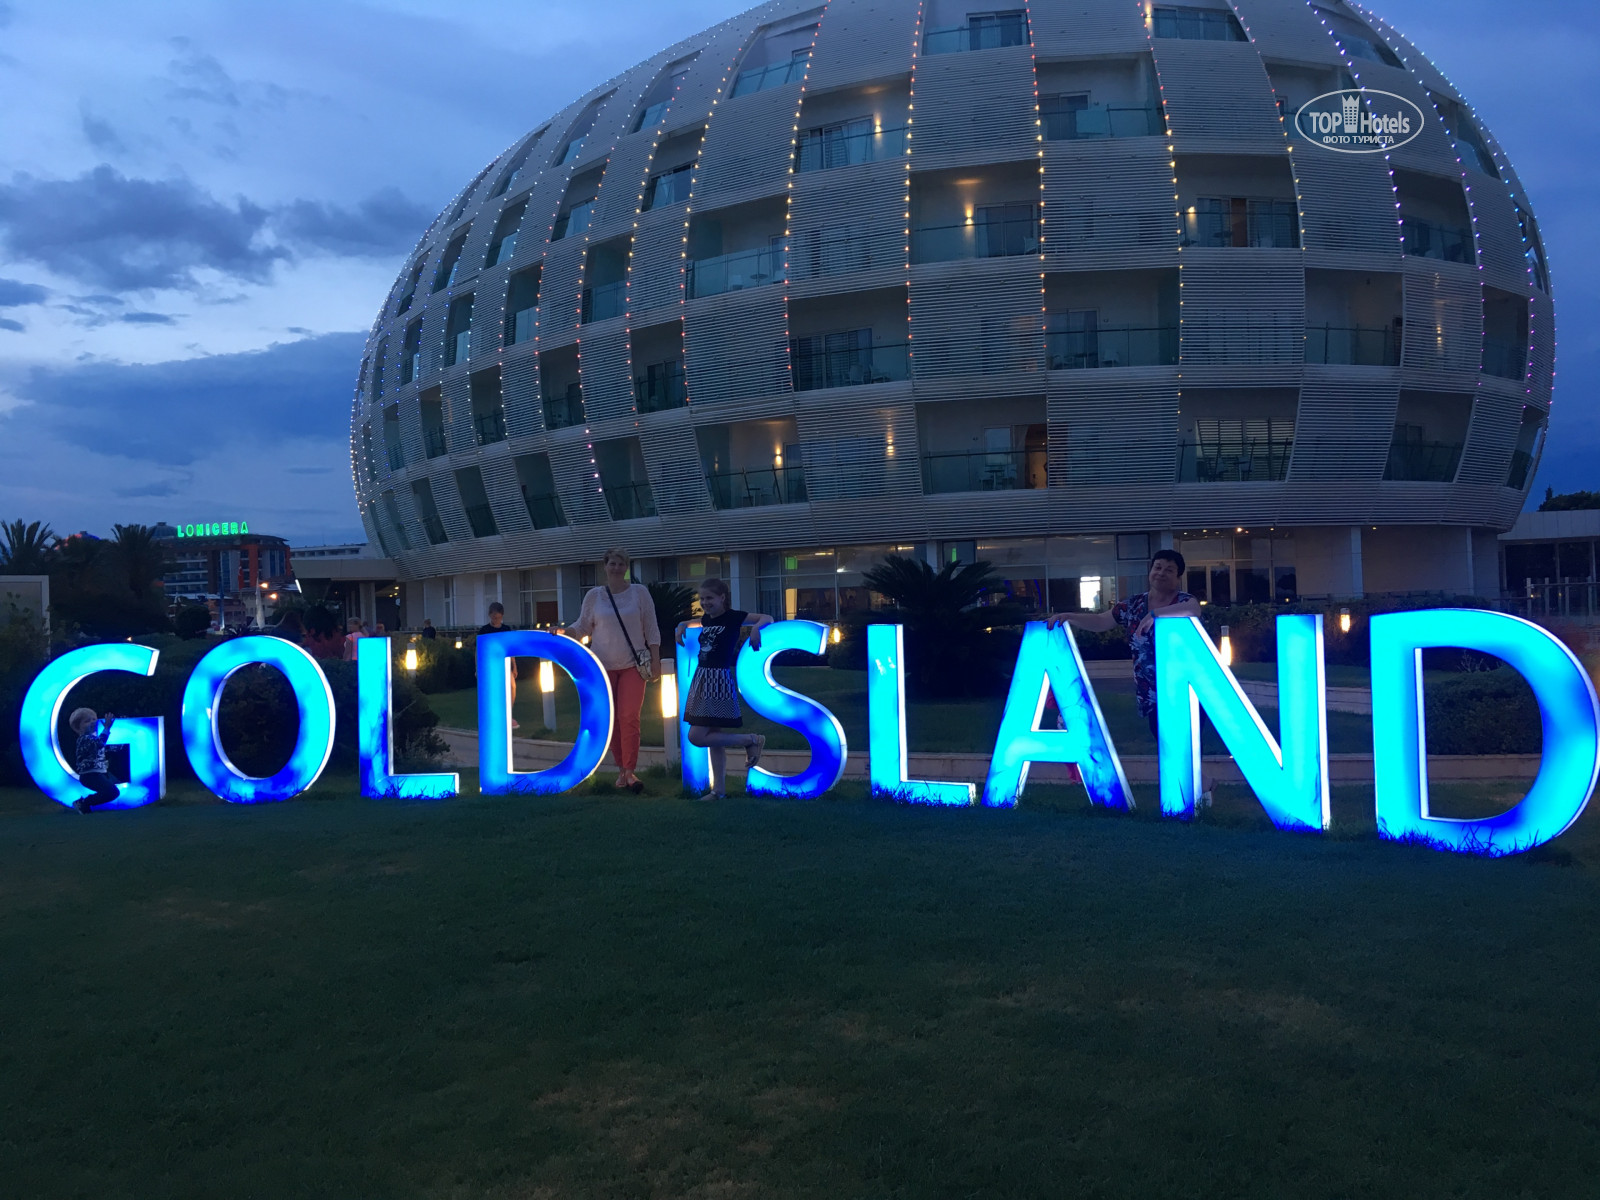 Gold island selected. Gold Island 5 Турция. Gold Island 5 ***** (Тюрклер). Голд Исланд Турция 5 звезд. Gold Island 5 корпуса.